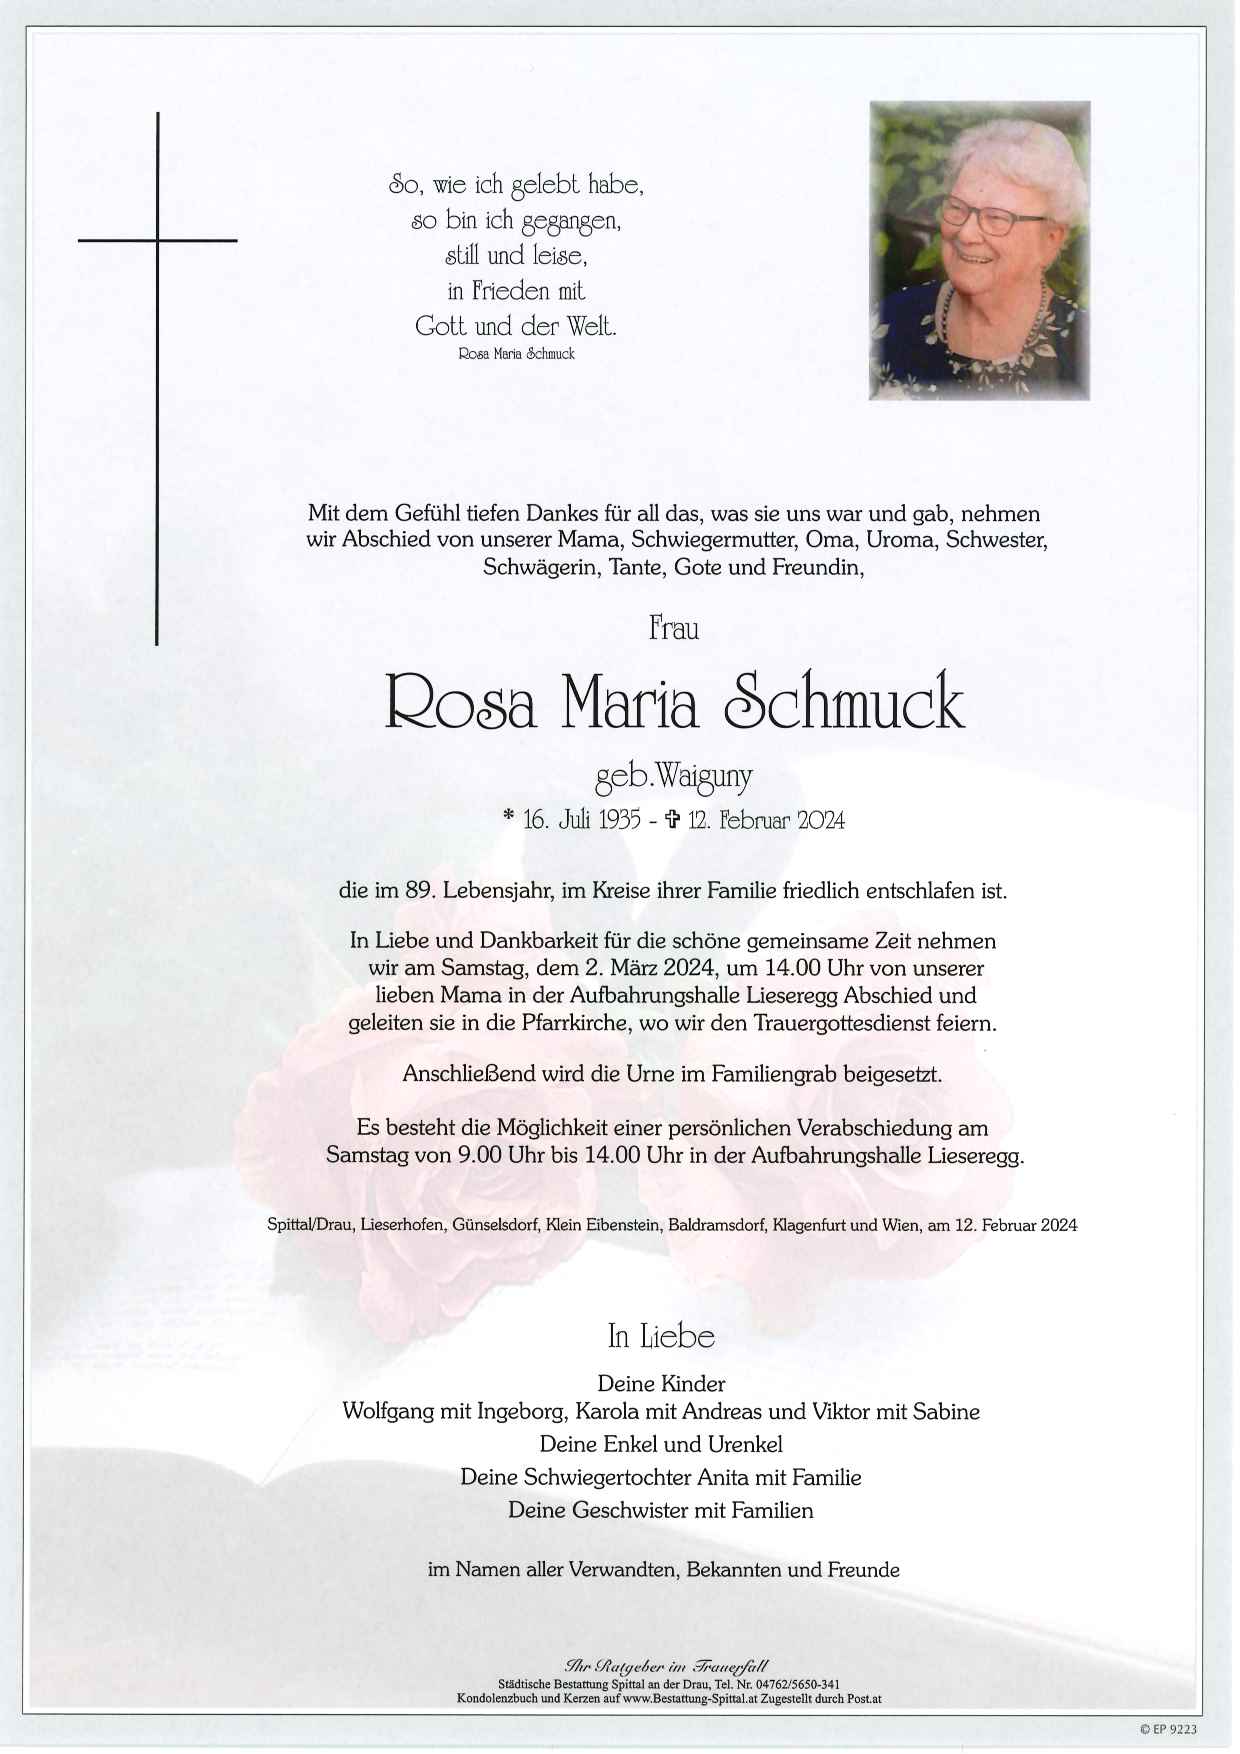 Rosa Maria Schmuck